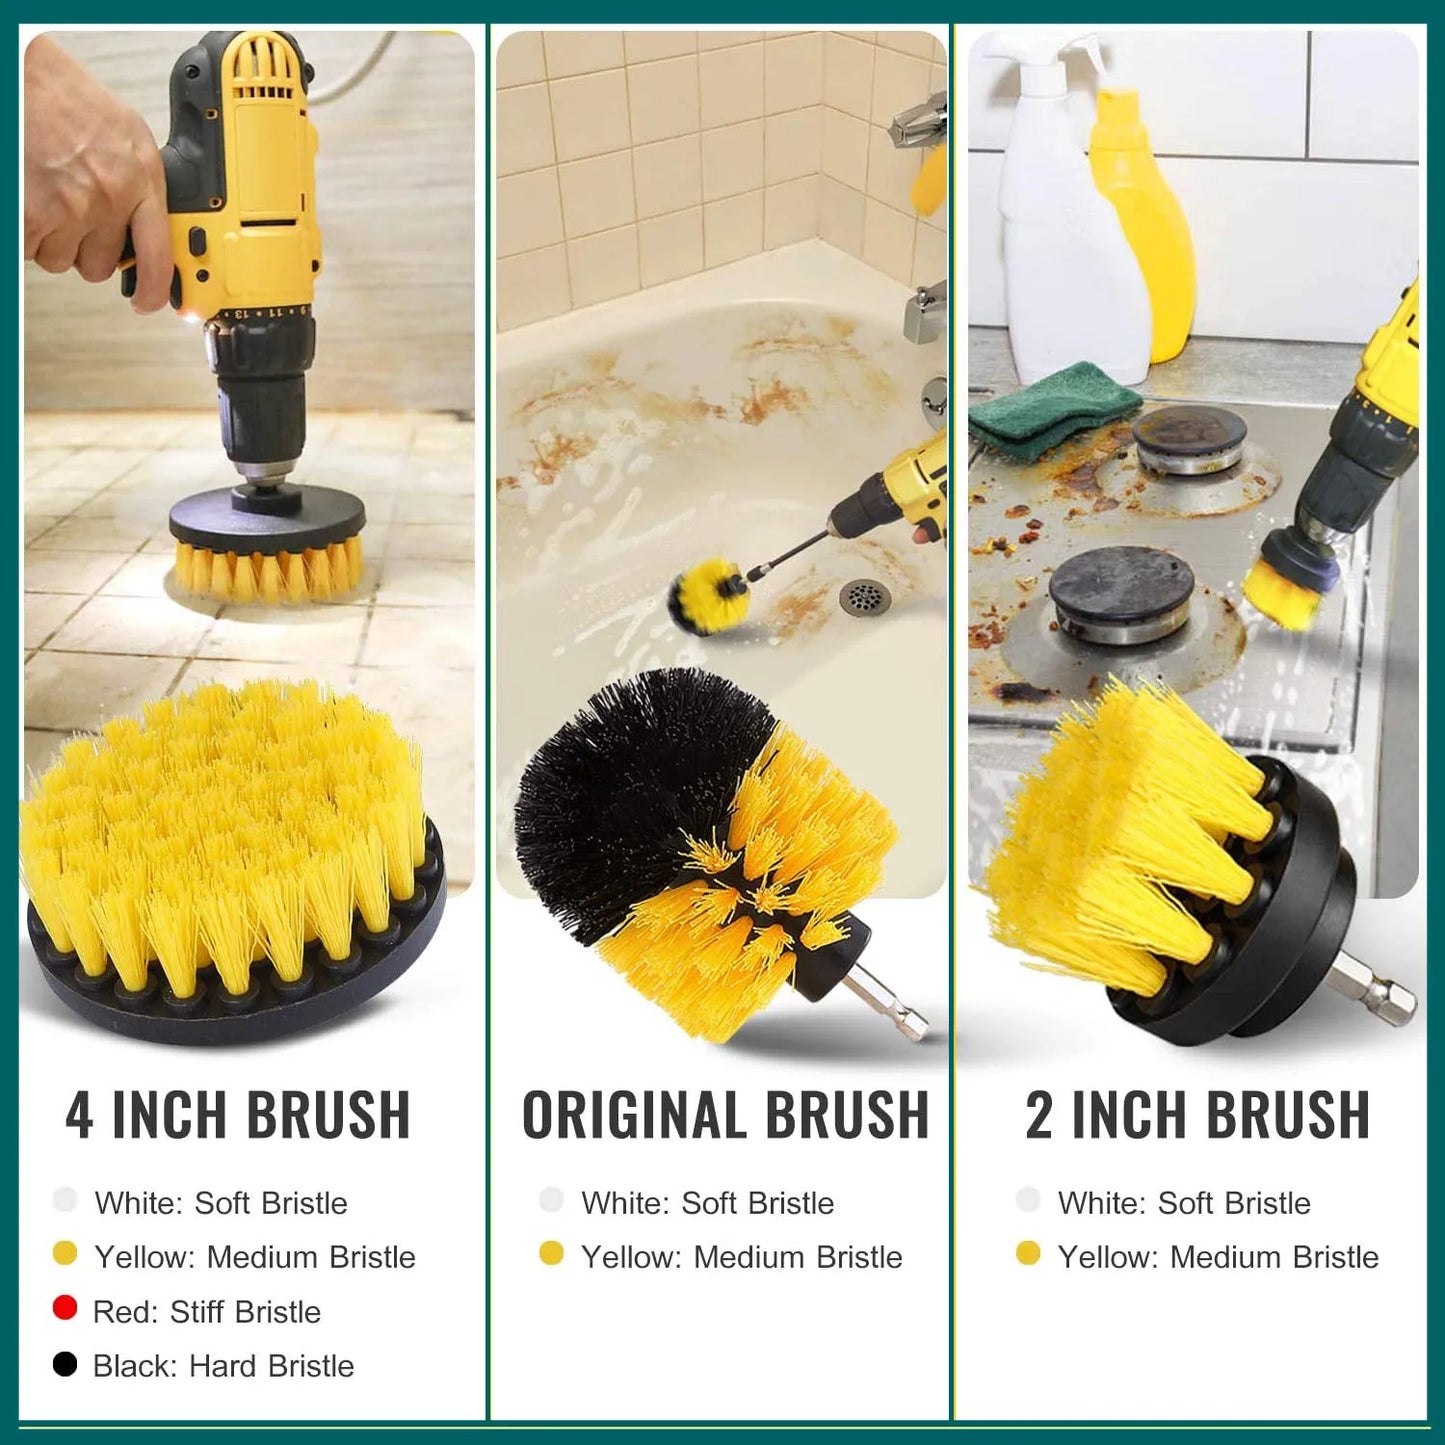 Drill Brush Set for Shower Tile and Grout Cleaning
Power Scrubber Cleaning Kit 
Power Scrubber Brush Pad Sponge Kit